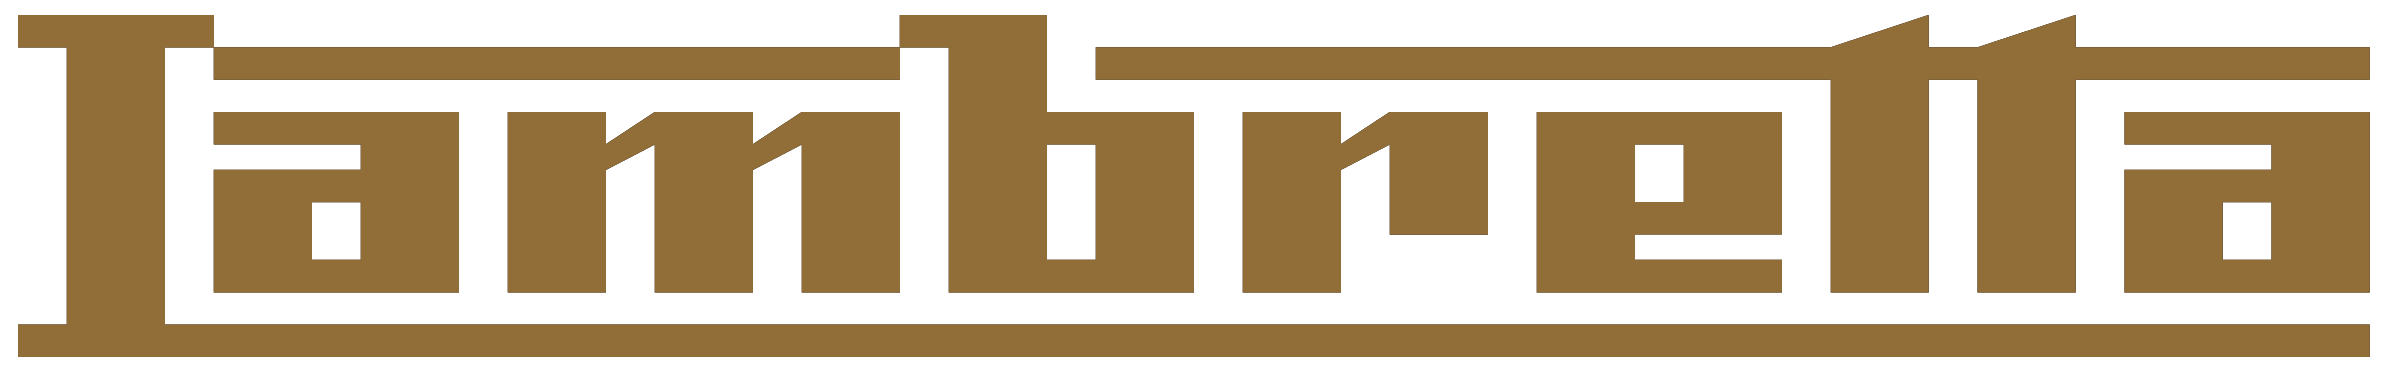 lambretta logo gold